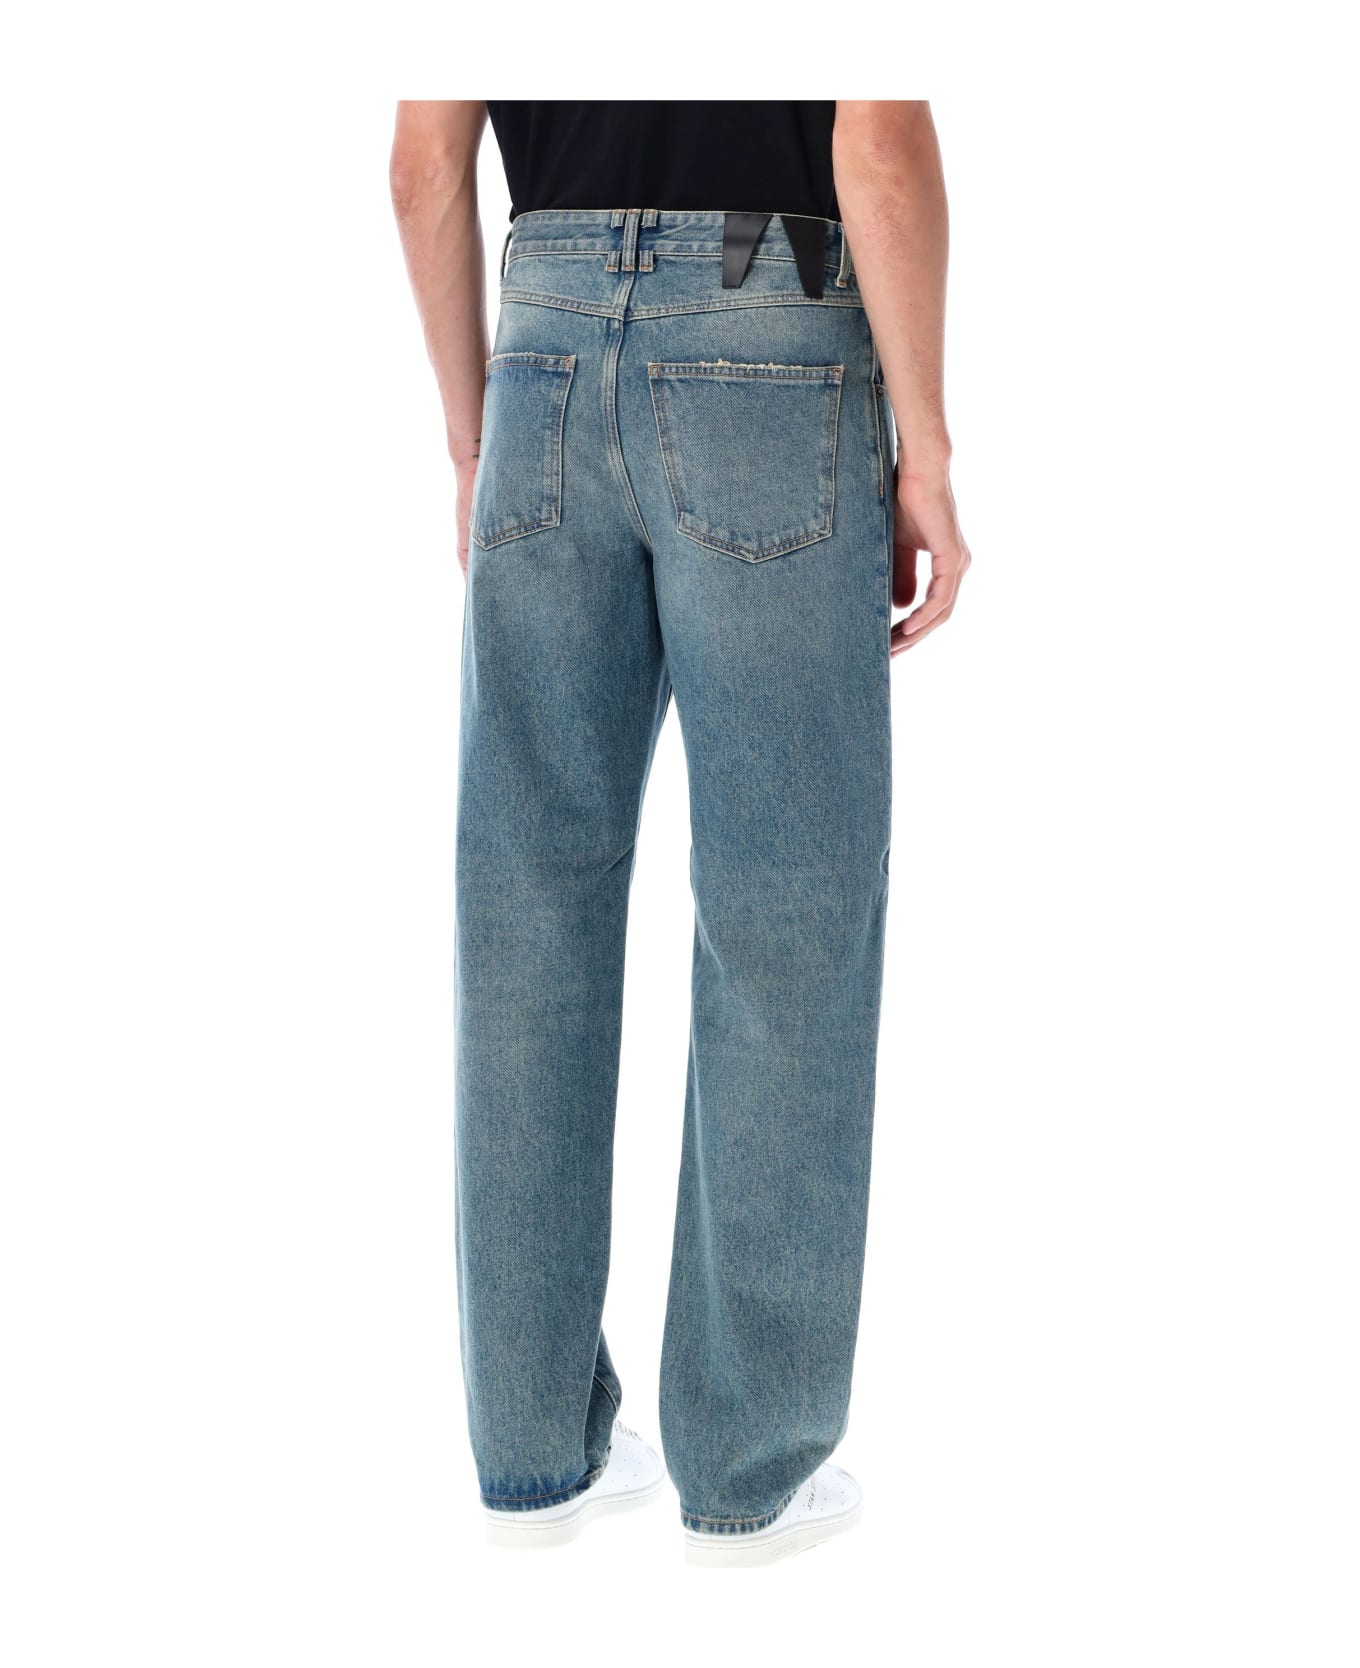 DARKPARK Mark Denim Jeans - BLUE WASHED